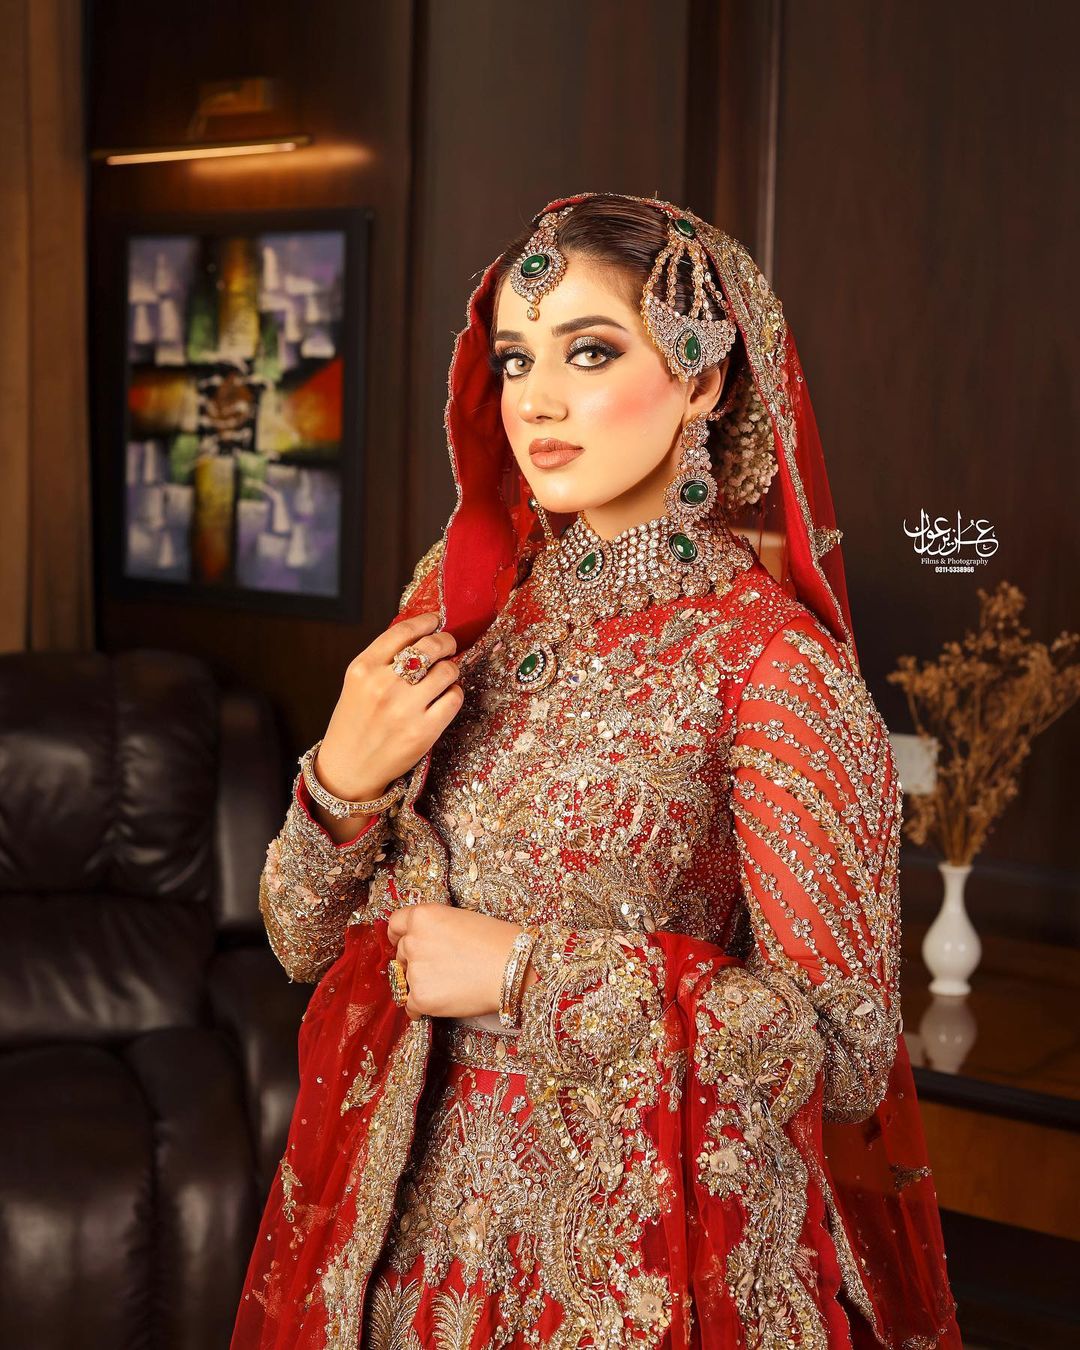 Jannat Mirza Looks Ravishing in a Scarlet Red Bridal Lehenga [Pictures ...